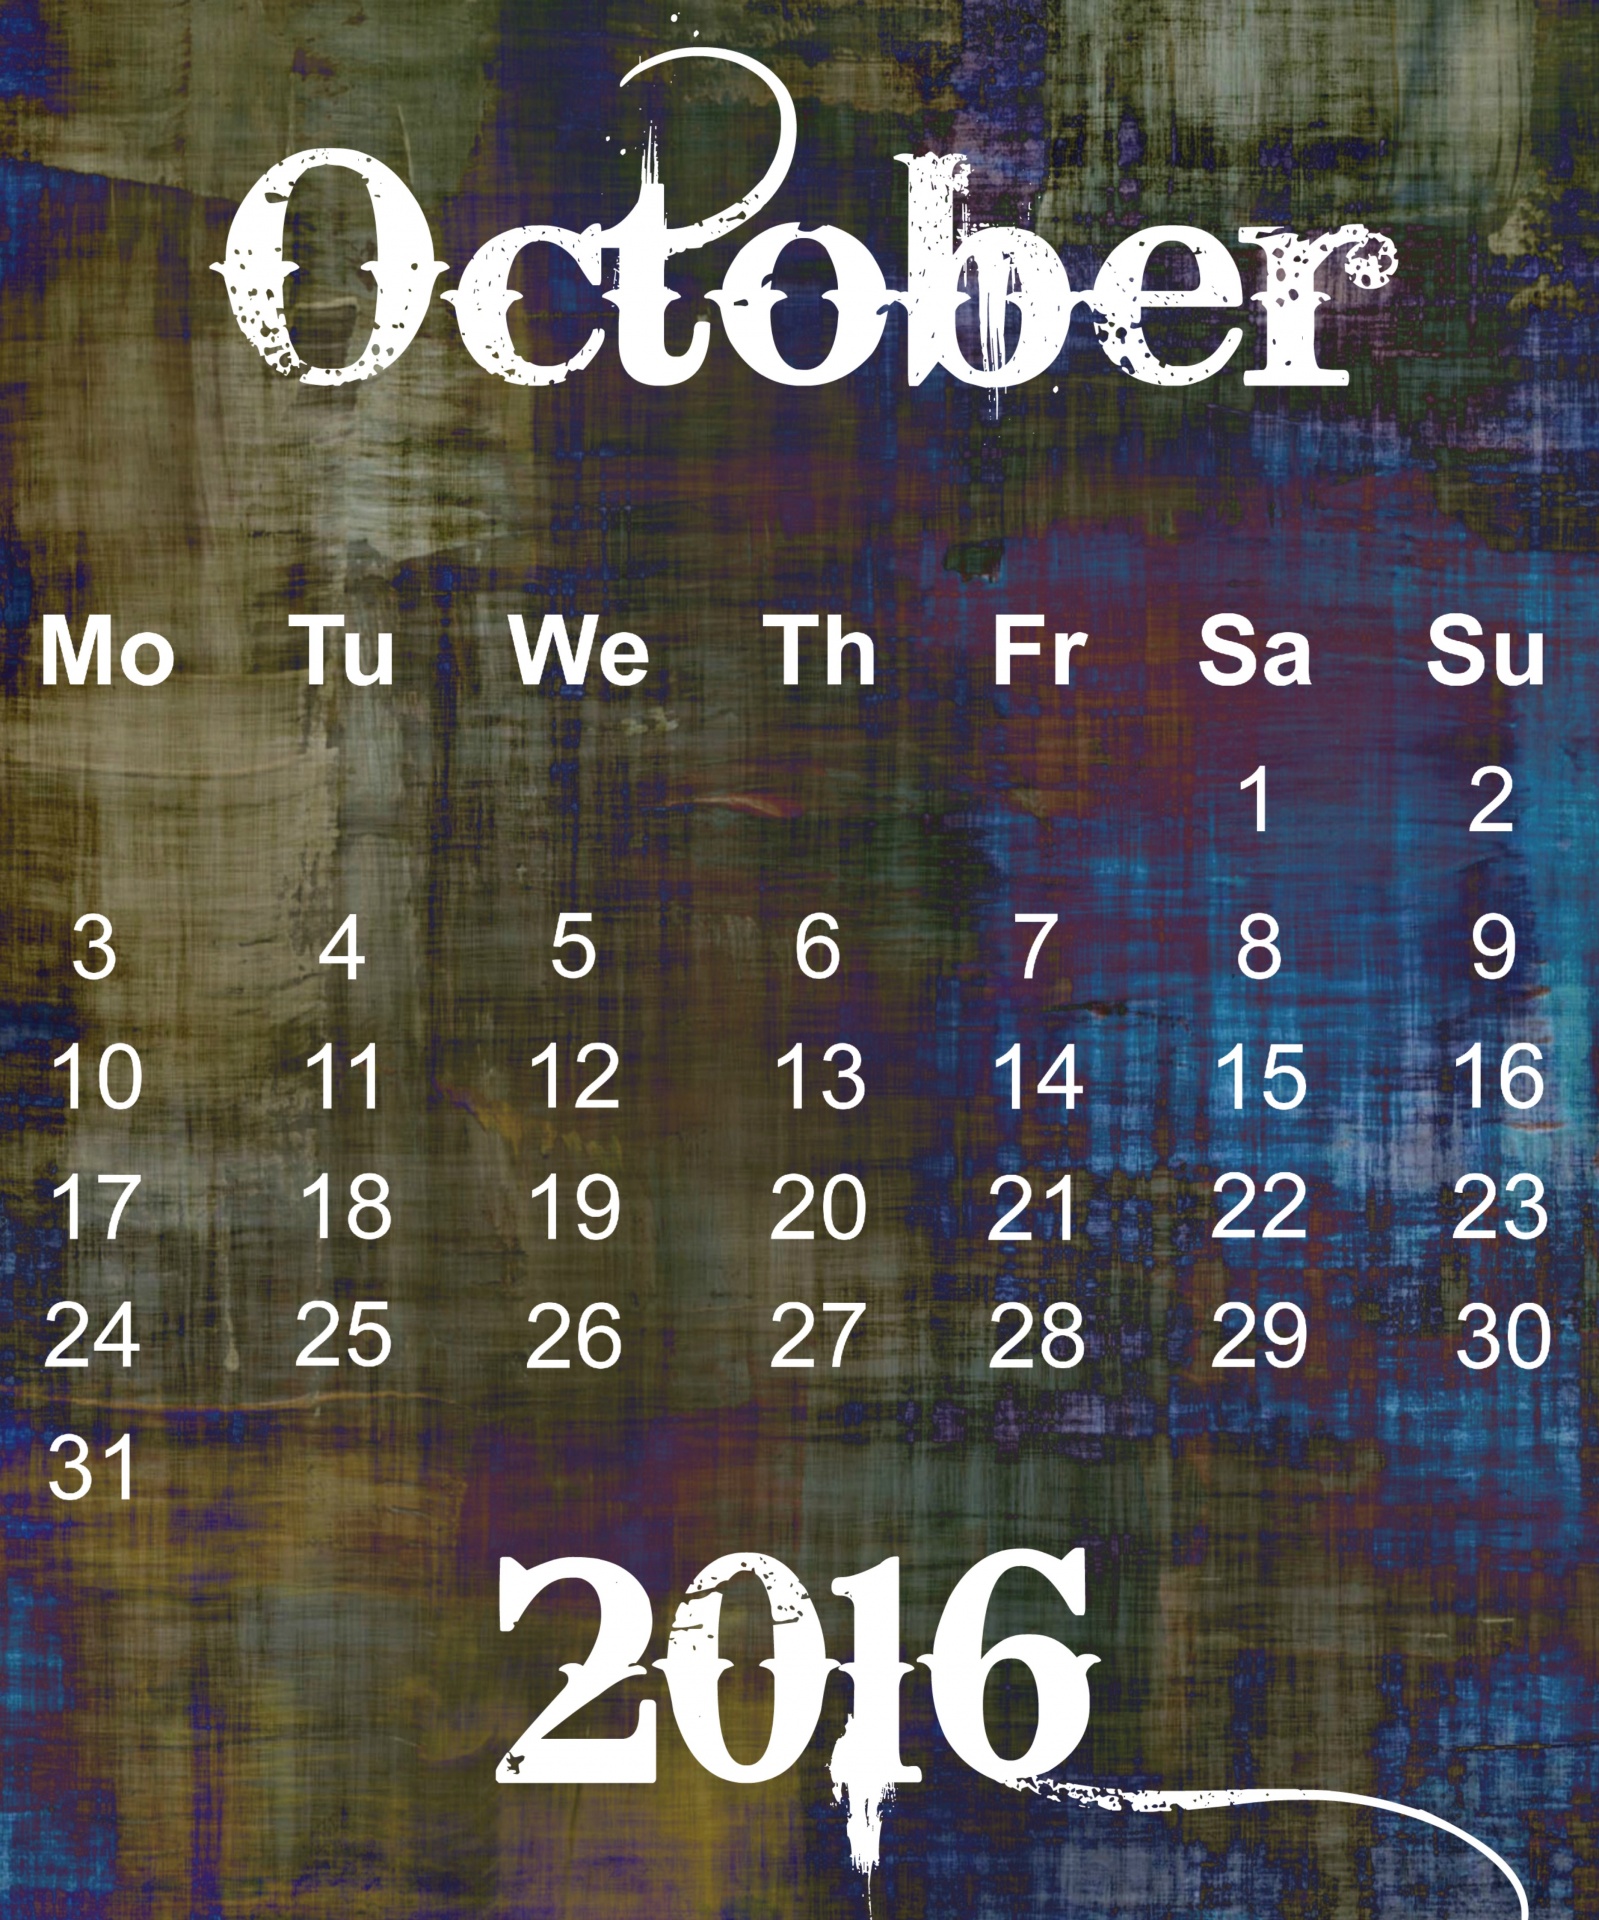 october 2016 calendar free photo